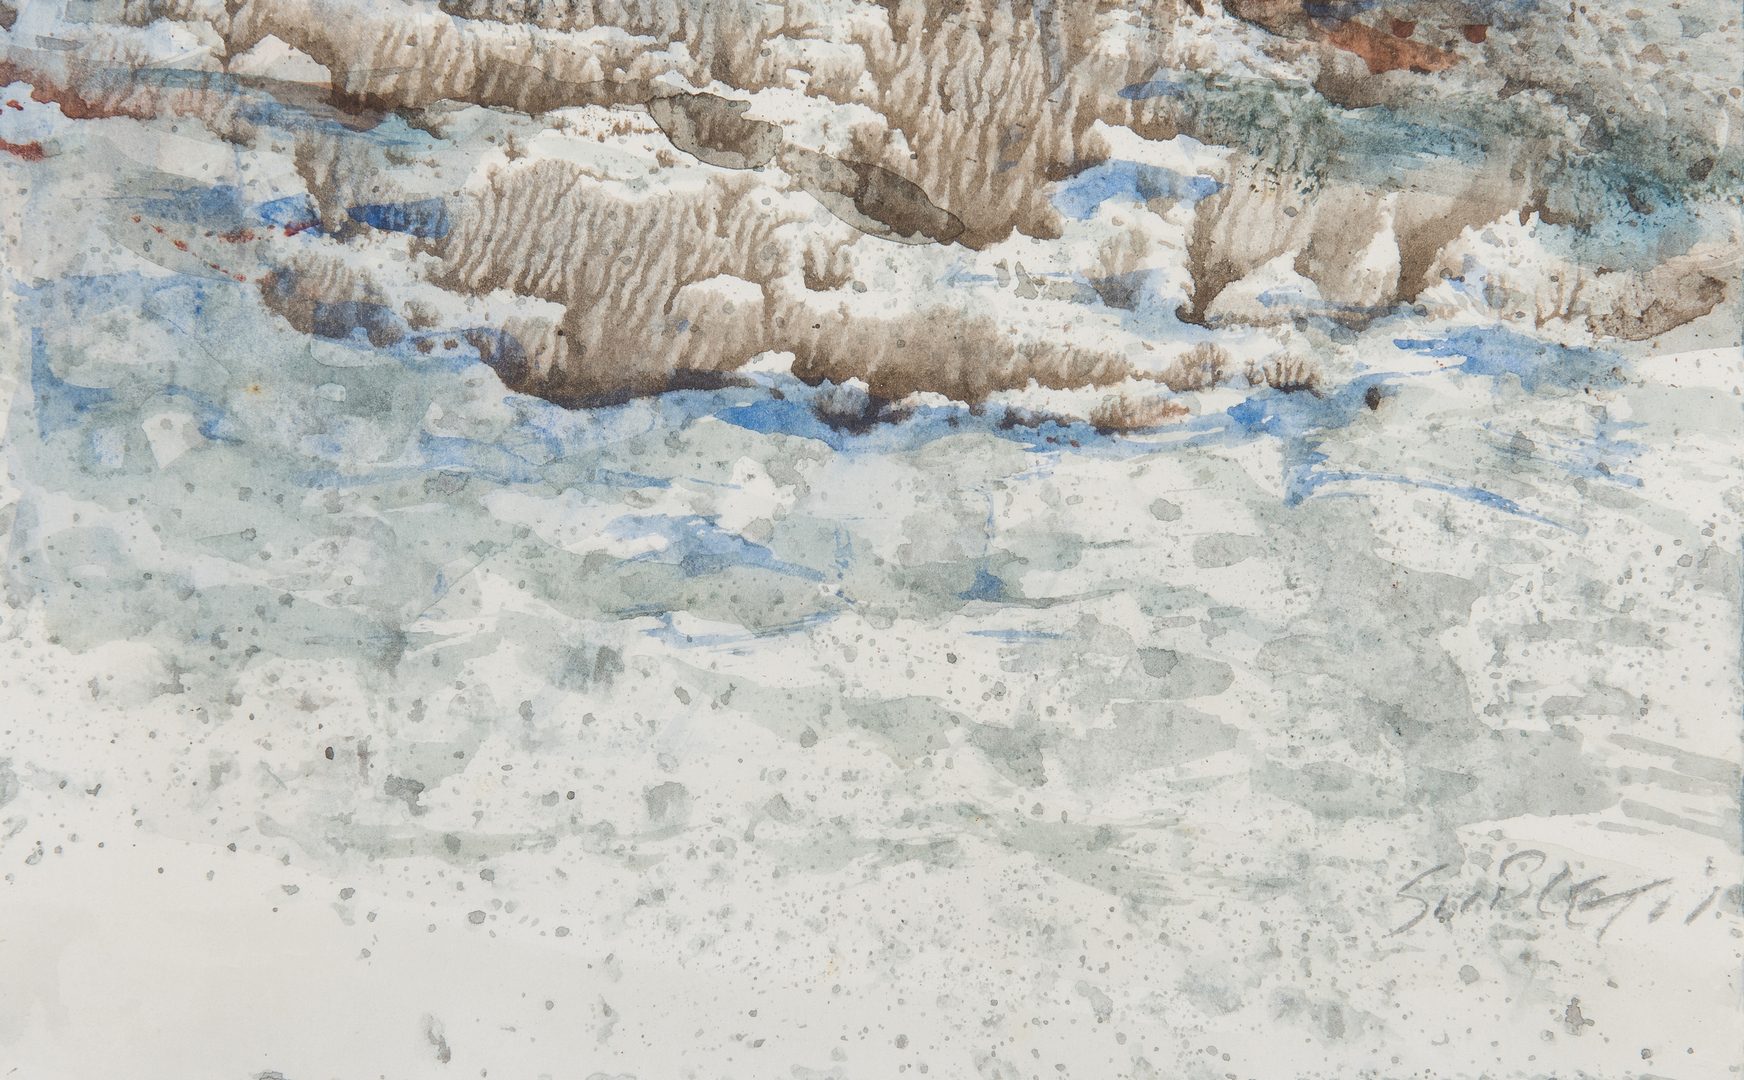 Lot 88: Carl Sublett, Watercolor Winter Scene